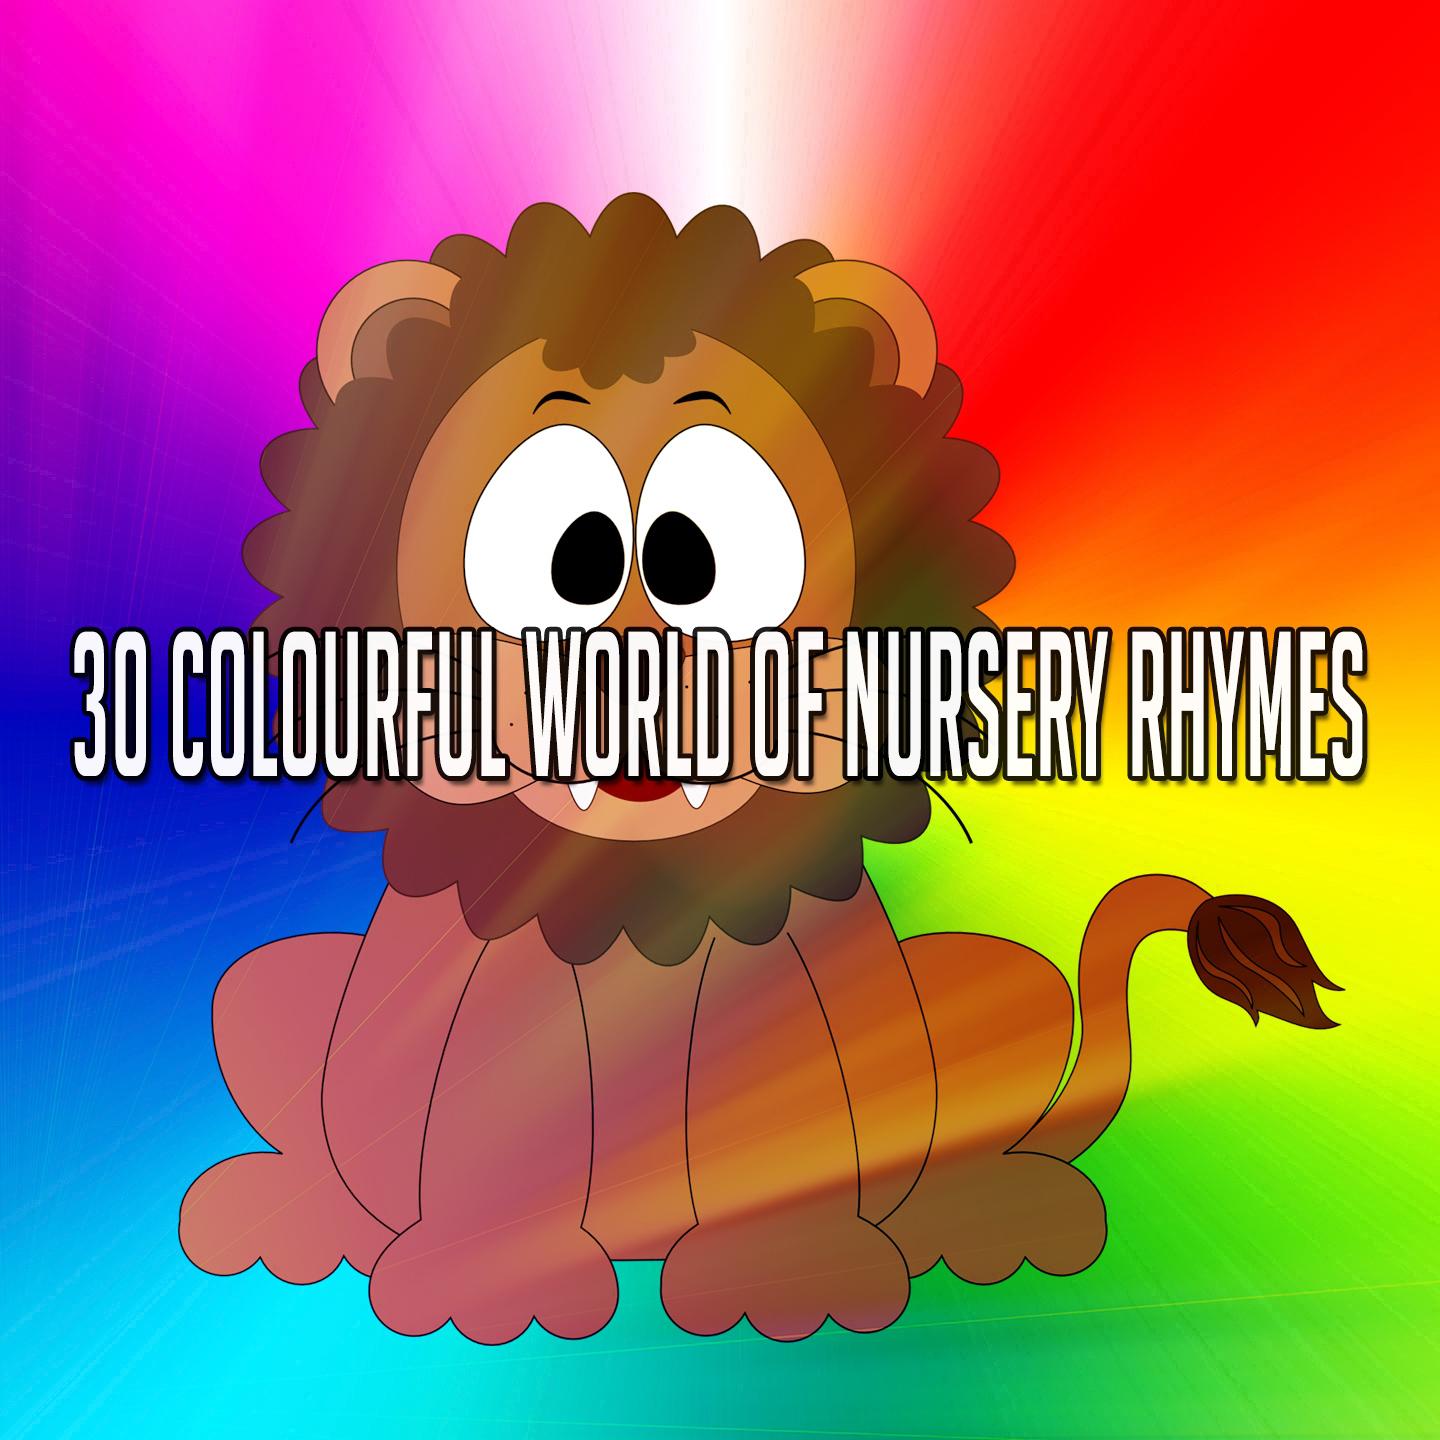 30 Colourful World of Nursery Rhymes